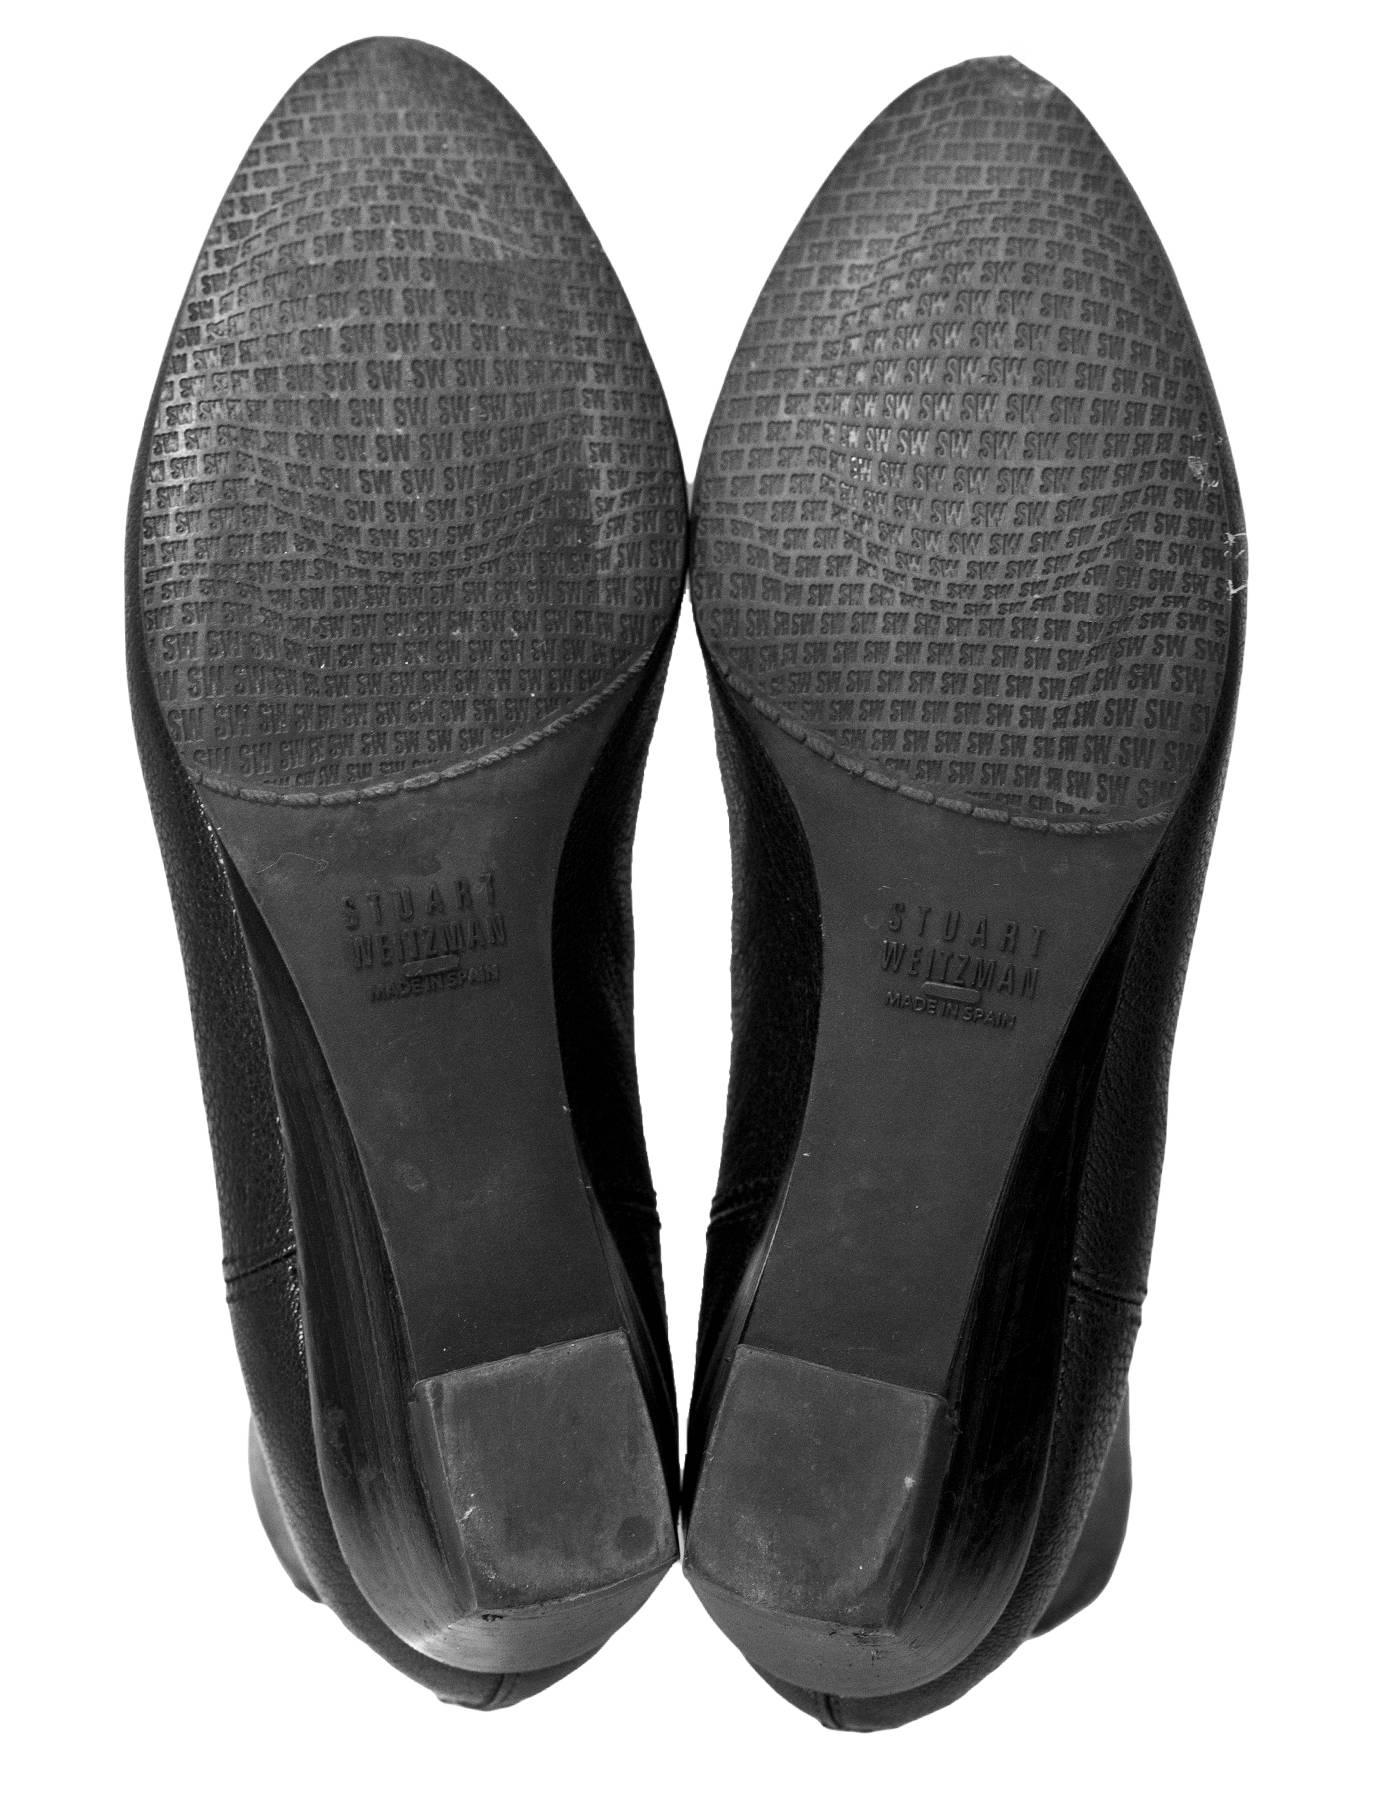 Stuart Weitzman Black Leather Ankle Boots Sz 6 2